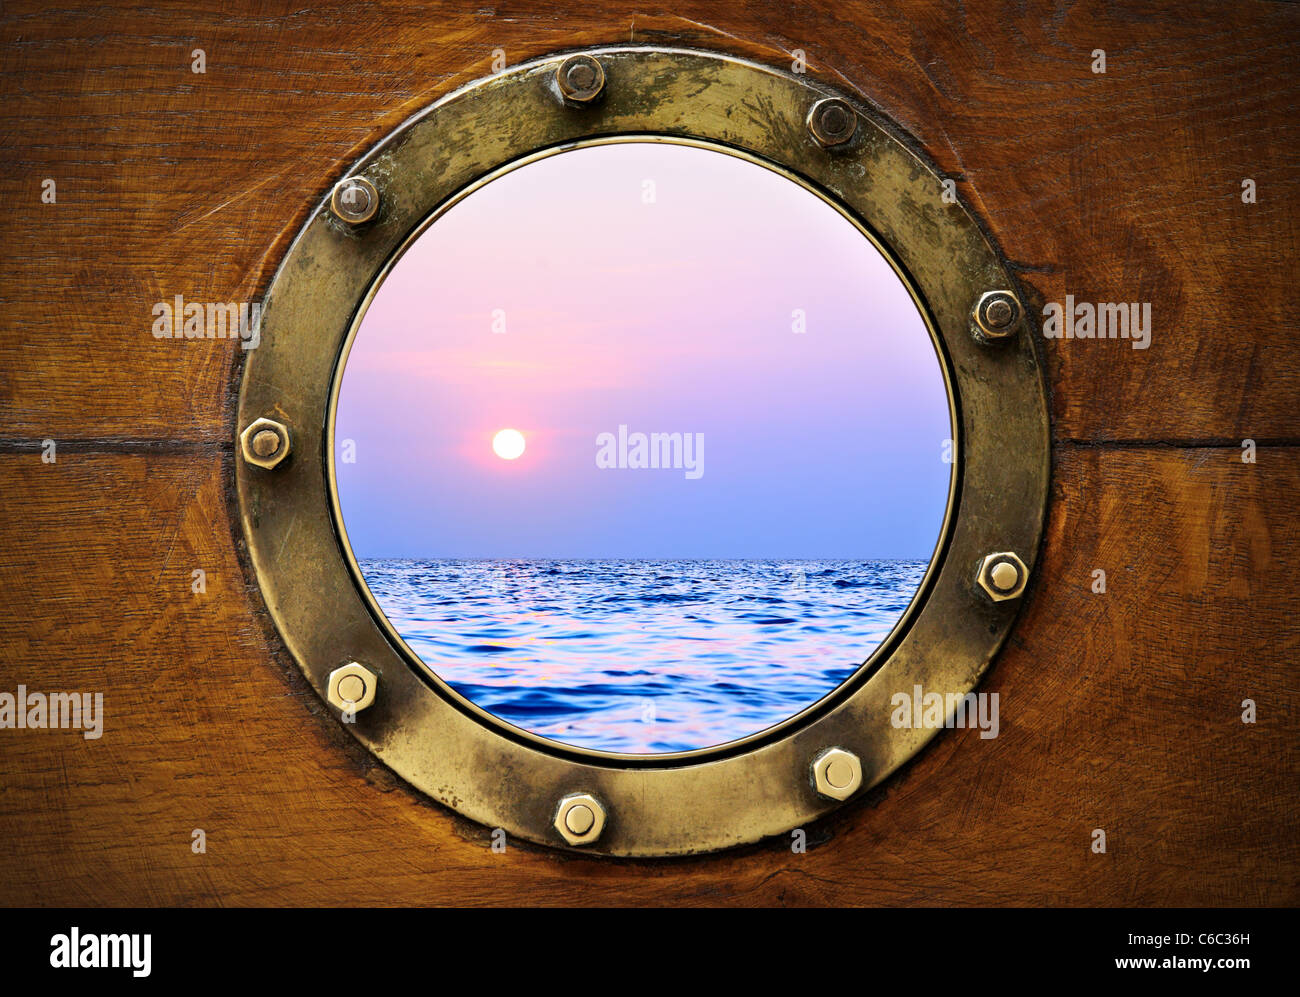 Barca oblò con vista oceano close up Foto stock - Alamy